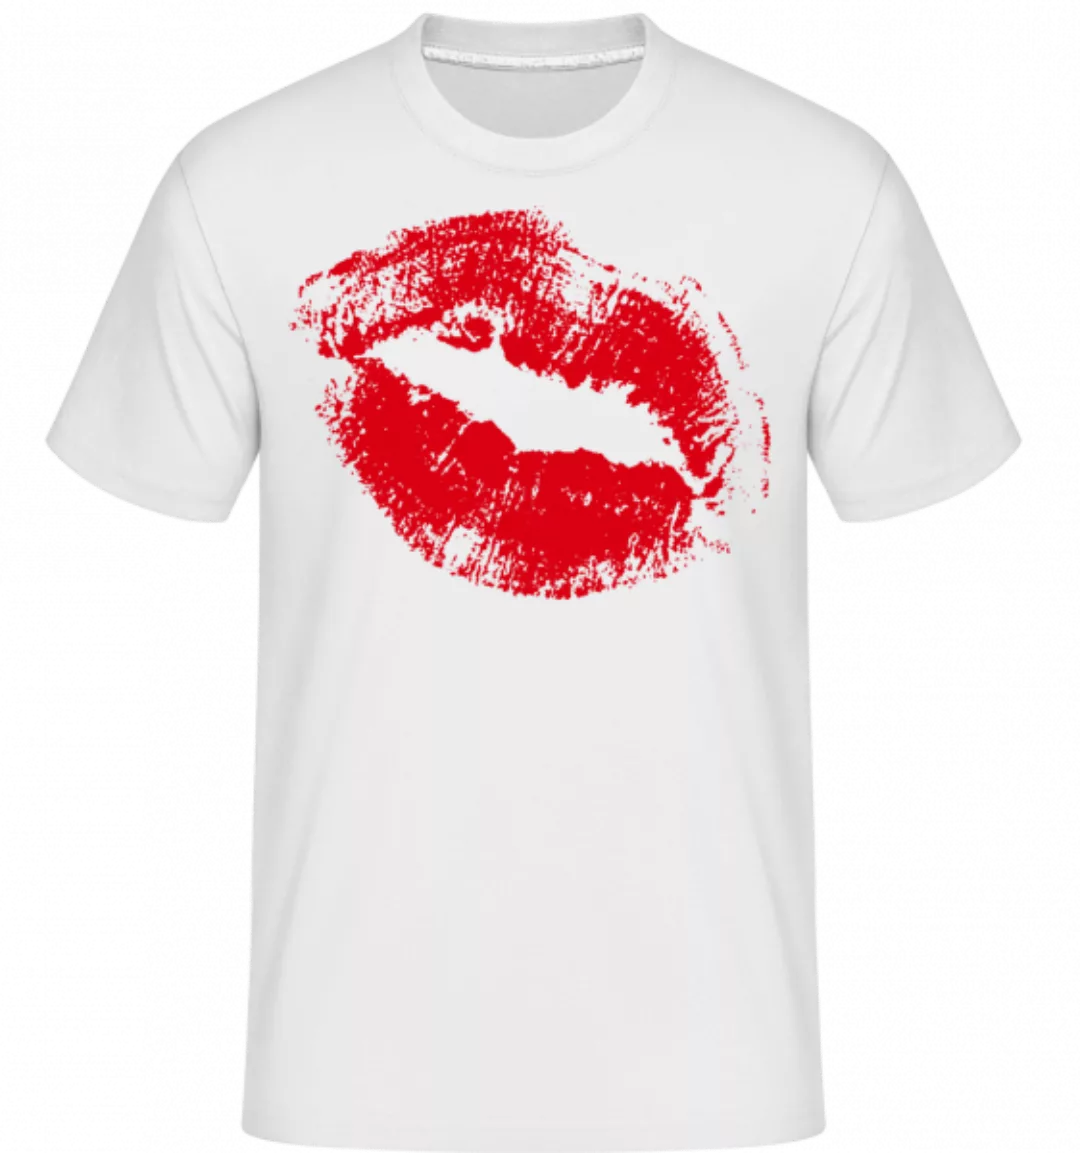 Red Lips · Shirtinator Männer T-Shirt günstig online kaufen